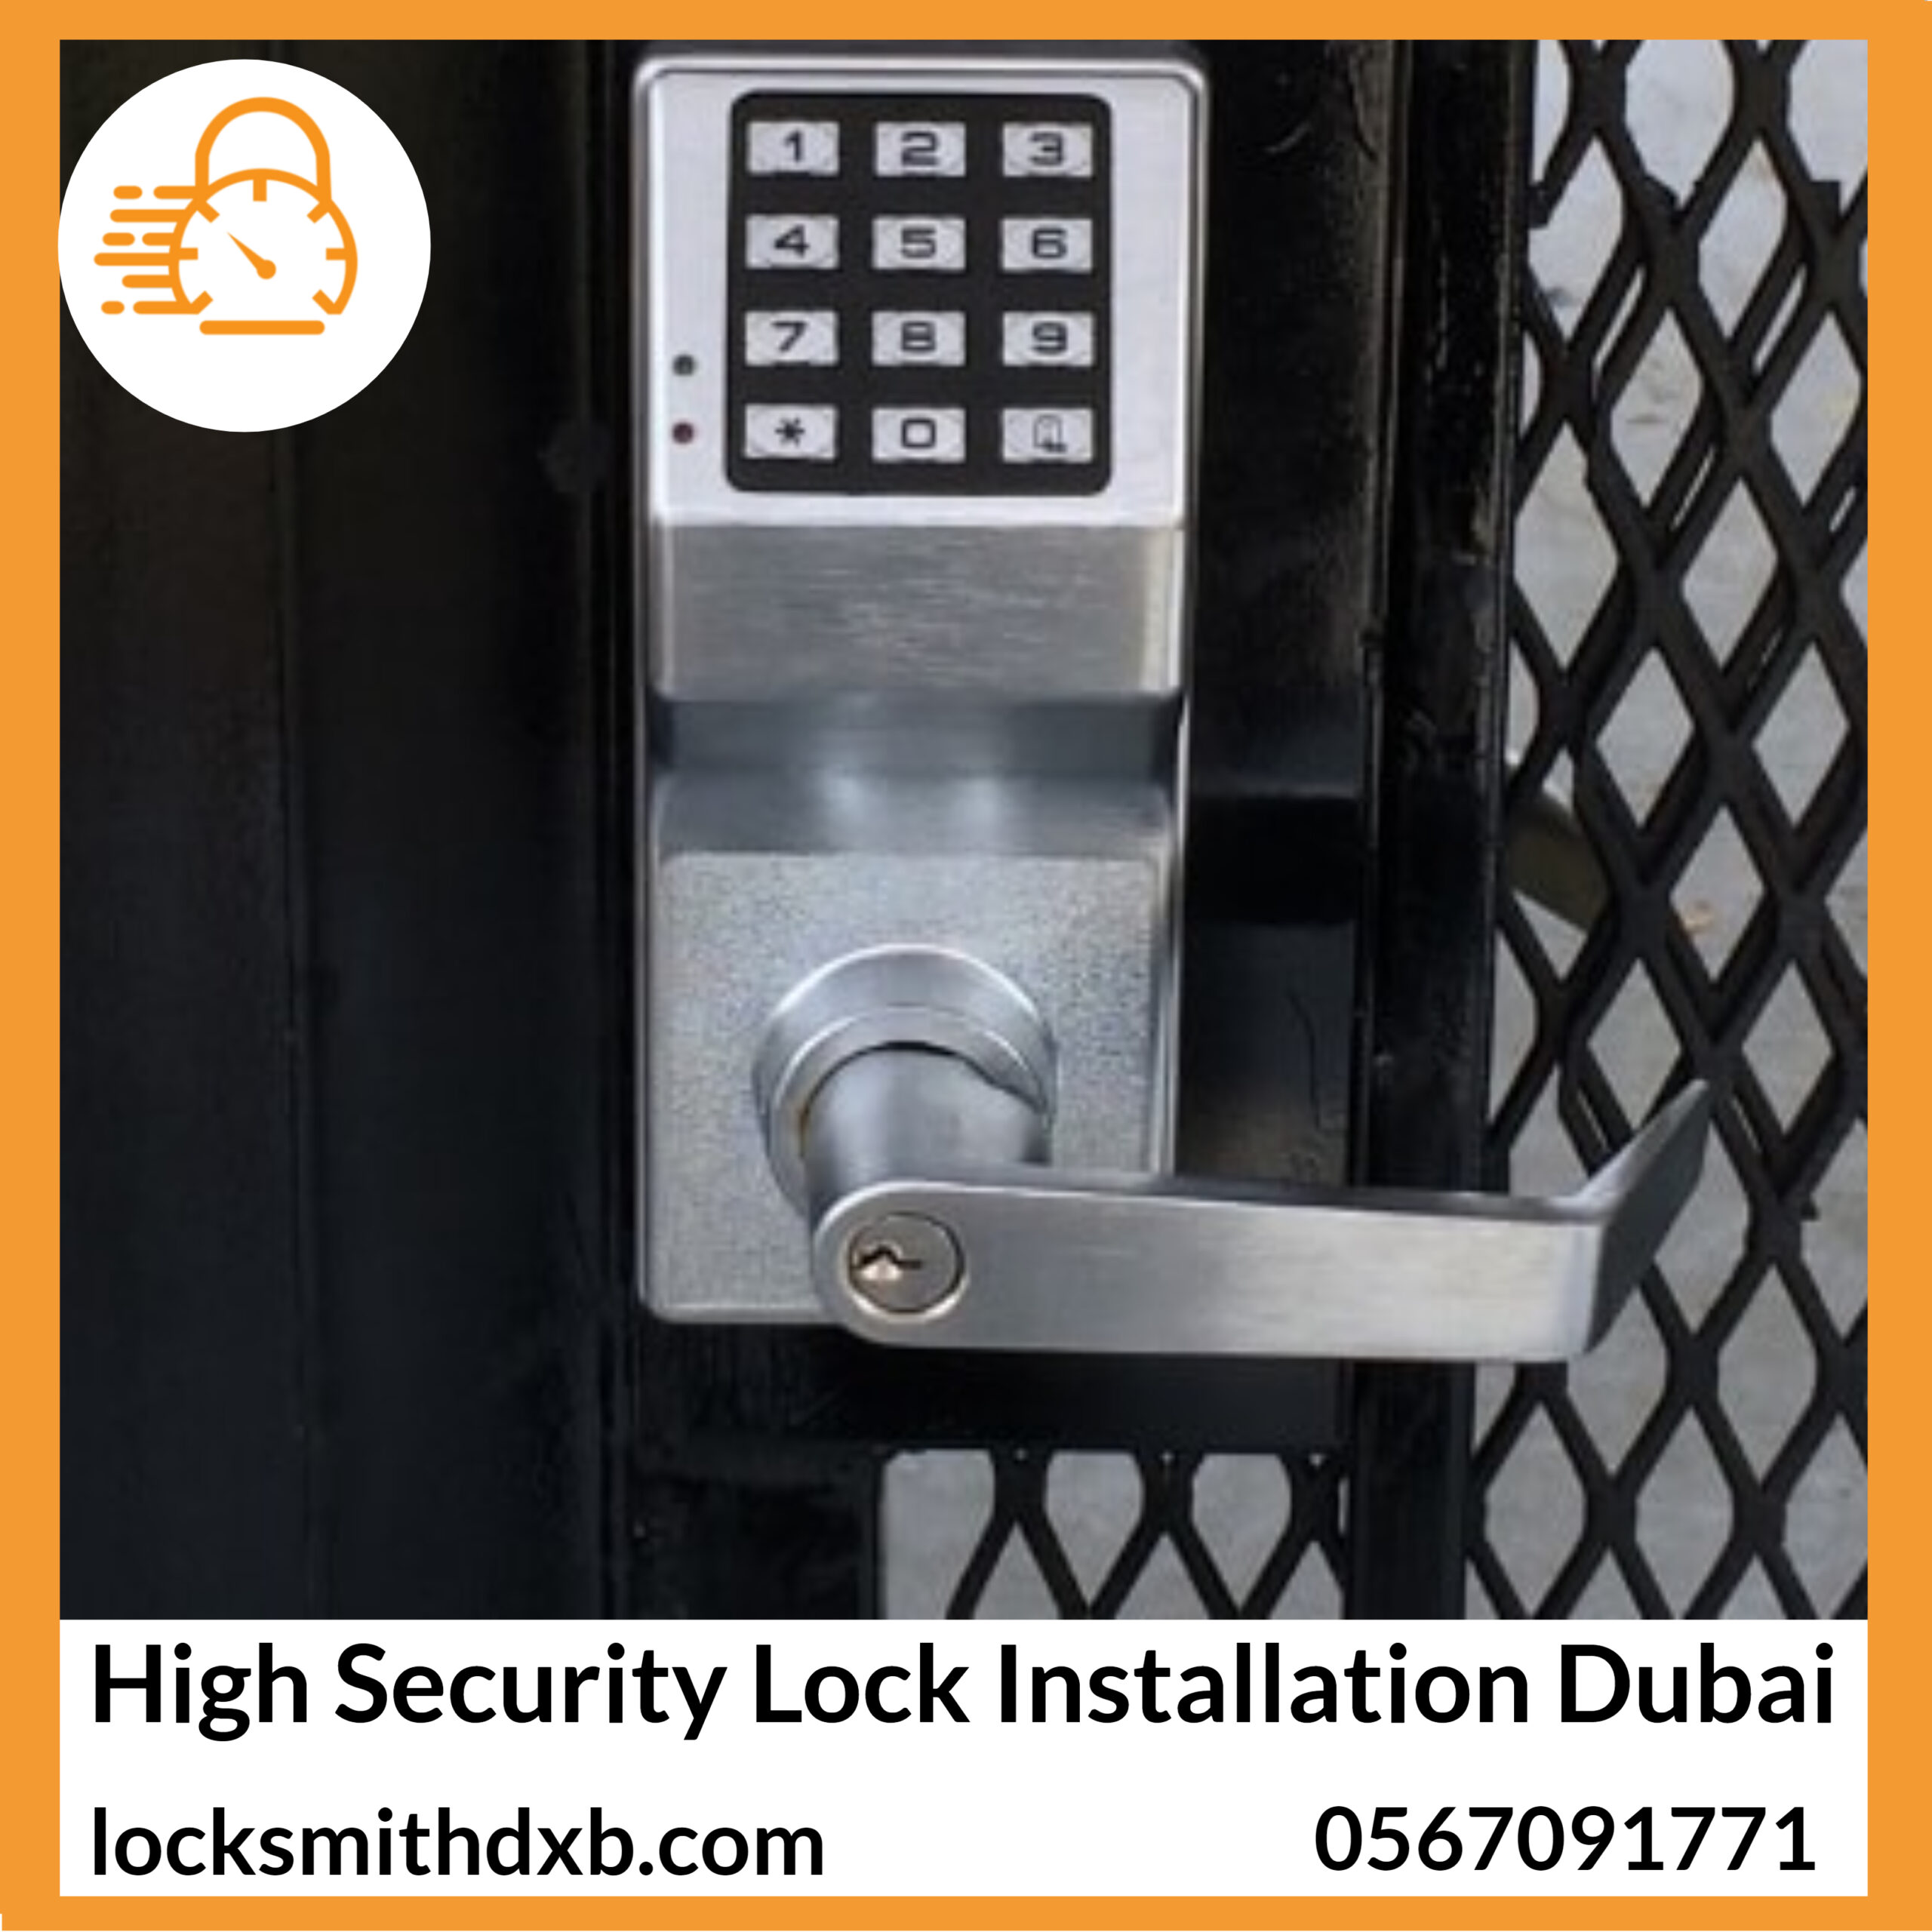 High Security Lock Installation Dubai